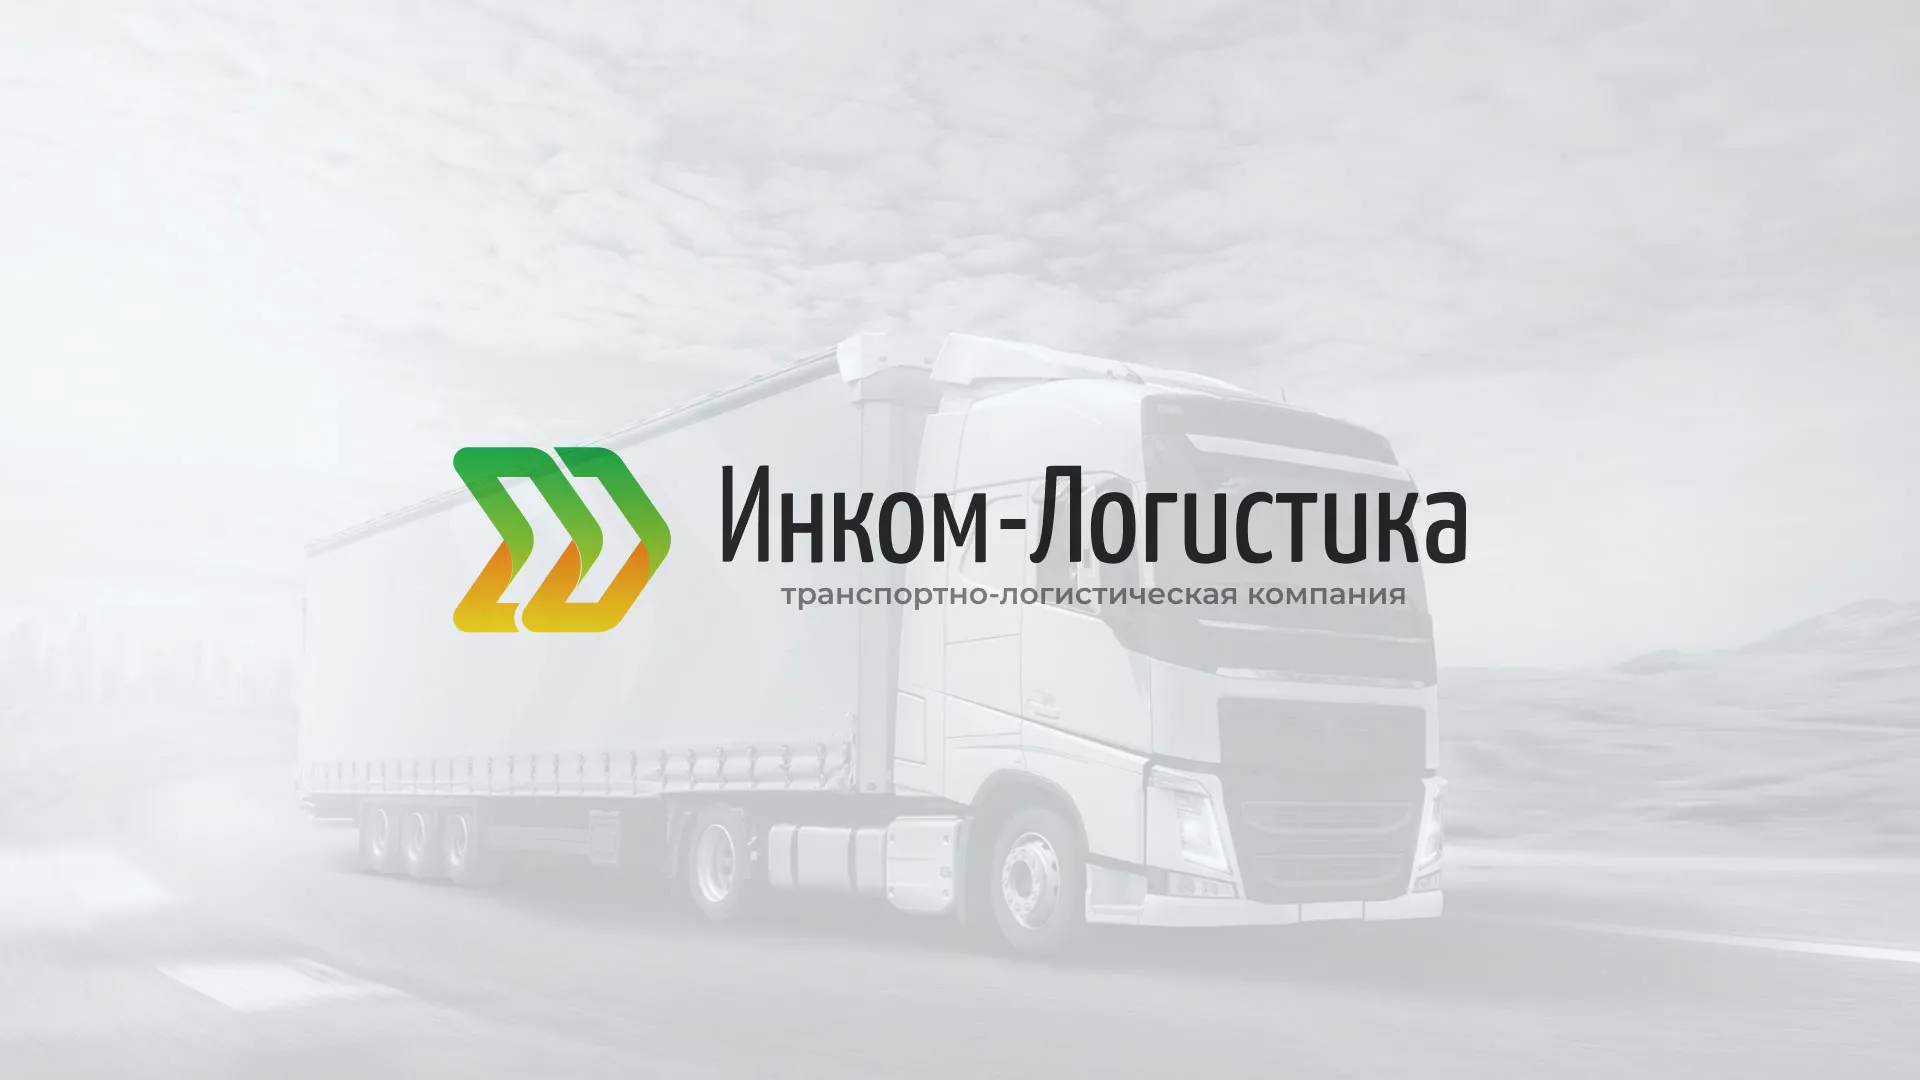 Разработка логотипа и сайта компании «Инком-Логистика» в Кирово-Чепецке